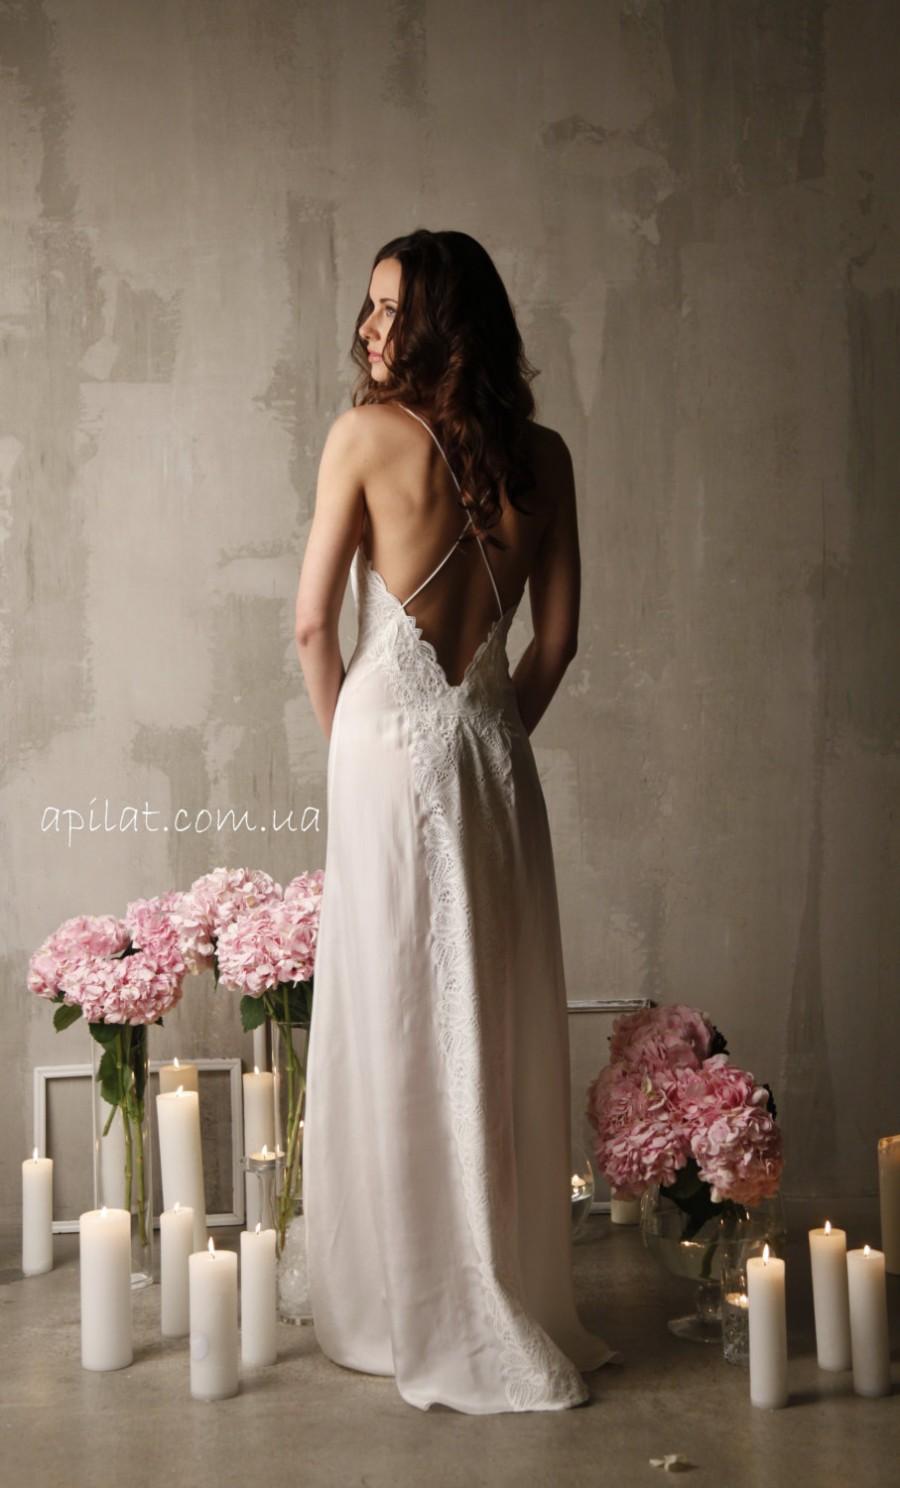 زفاف - Long Silk Bridal Nightgown With Open Back and Lace F12(Lingerie, Nightdress), Bridal Lingerie, Wedding Lingerie, Honeymoon, Christmas Gifts